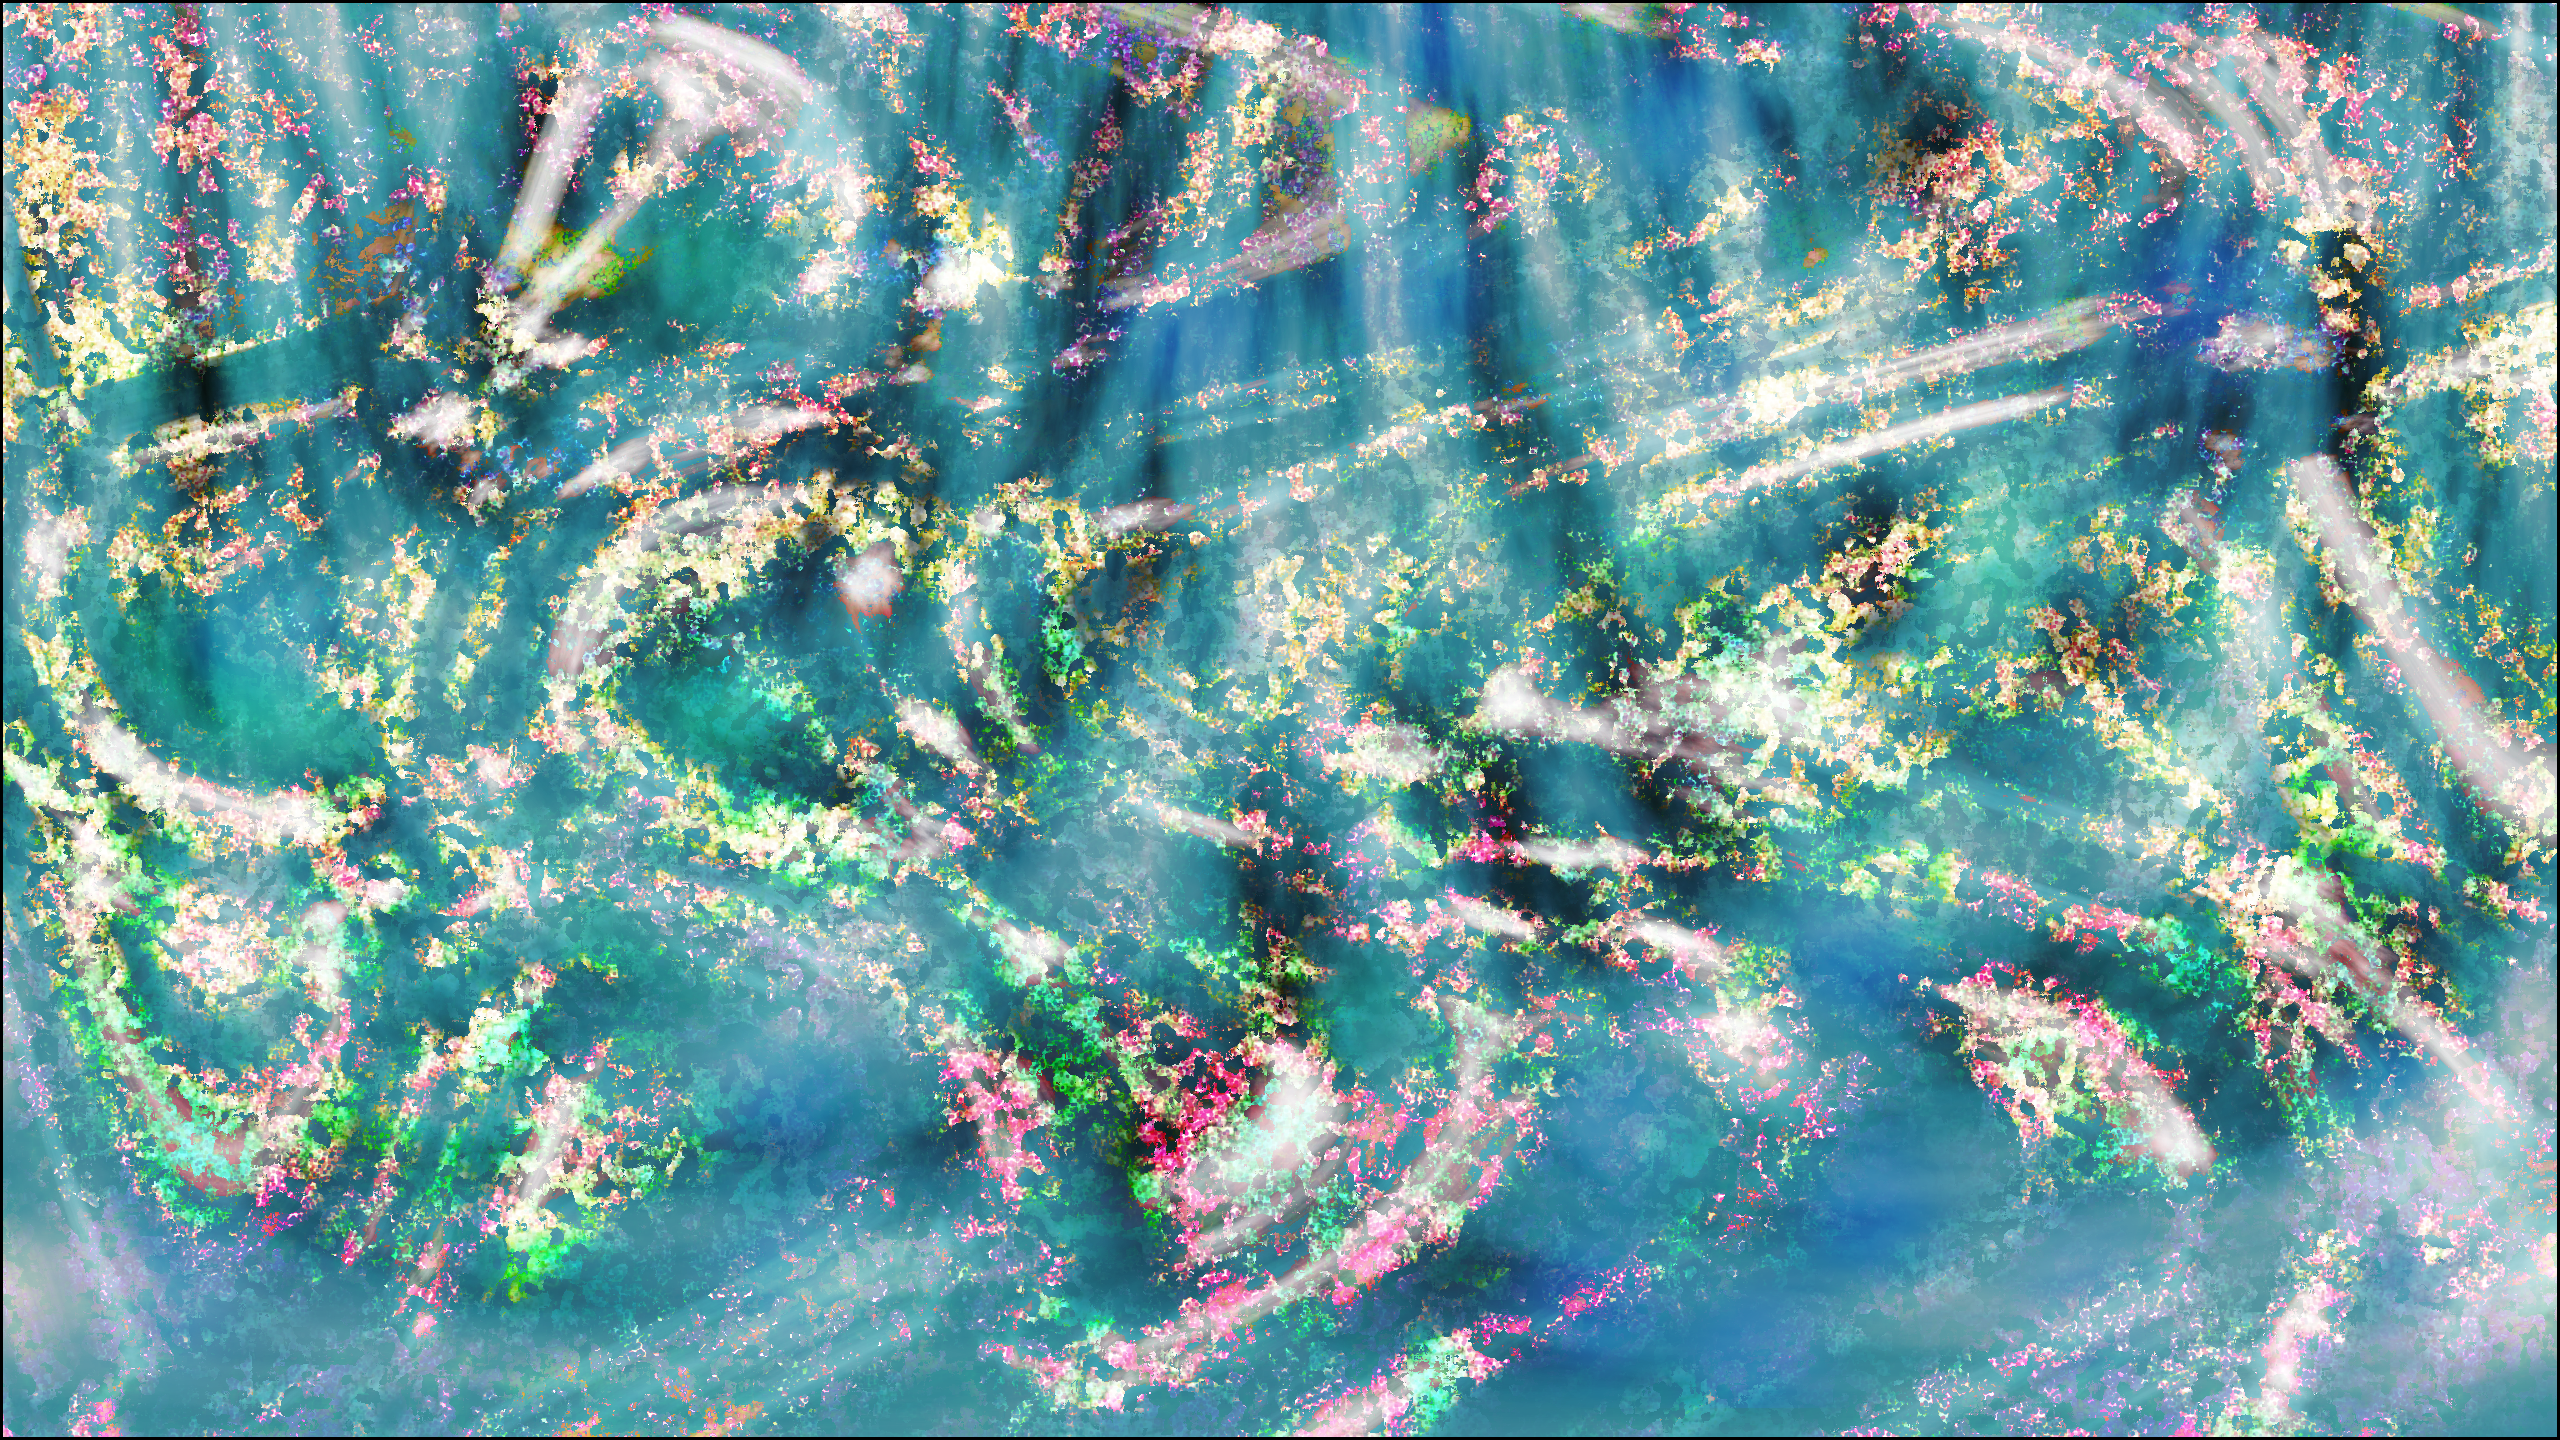 General 2560x1440 abstract LSD trippy brightness psychedelic digital art artwork surreal